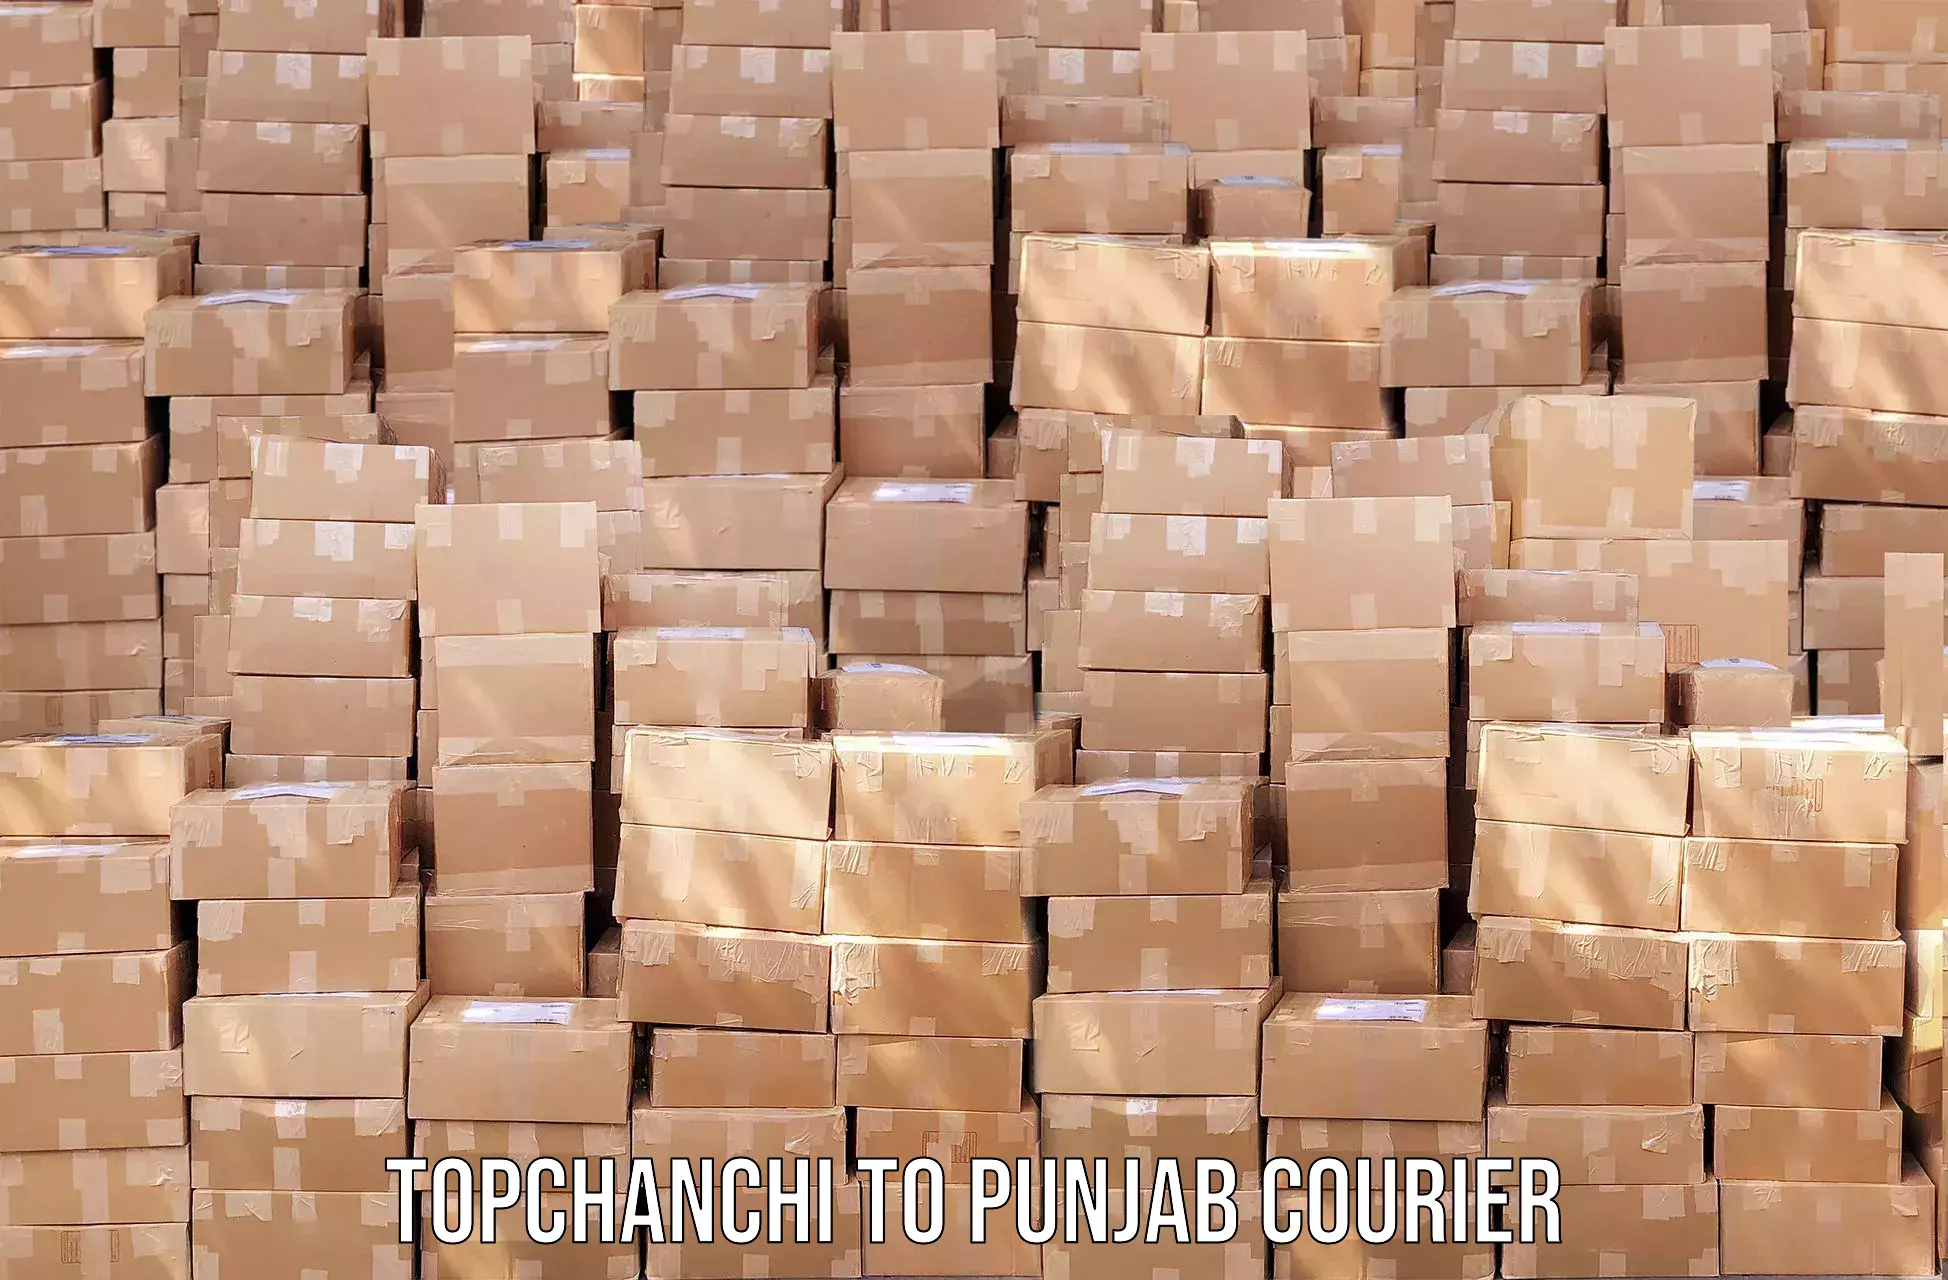 Courier insurance Topchanchi to Punjab